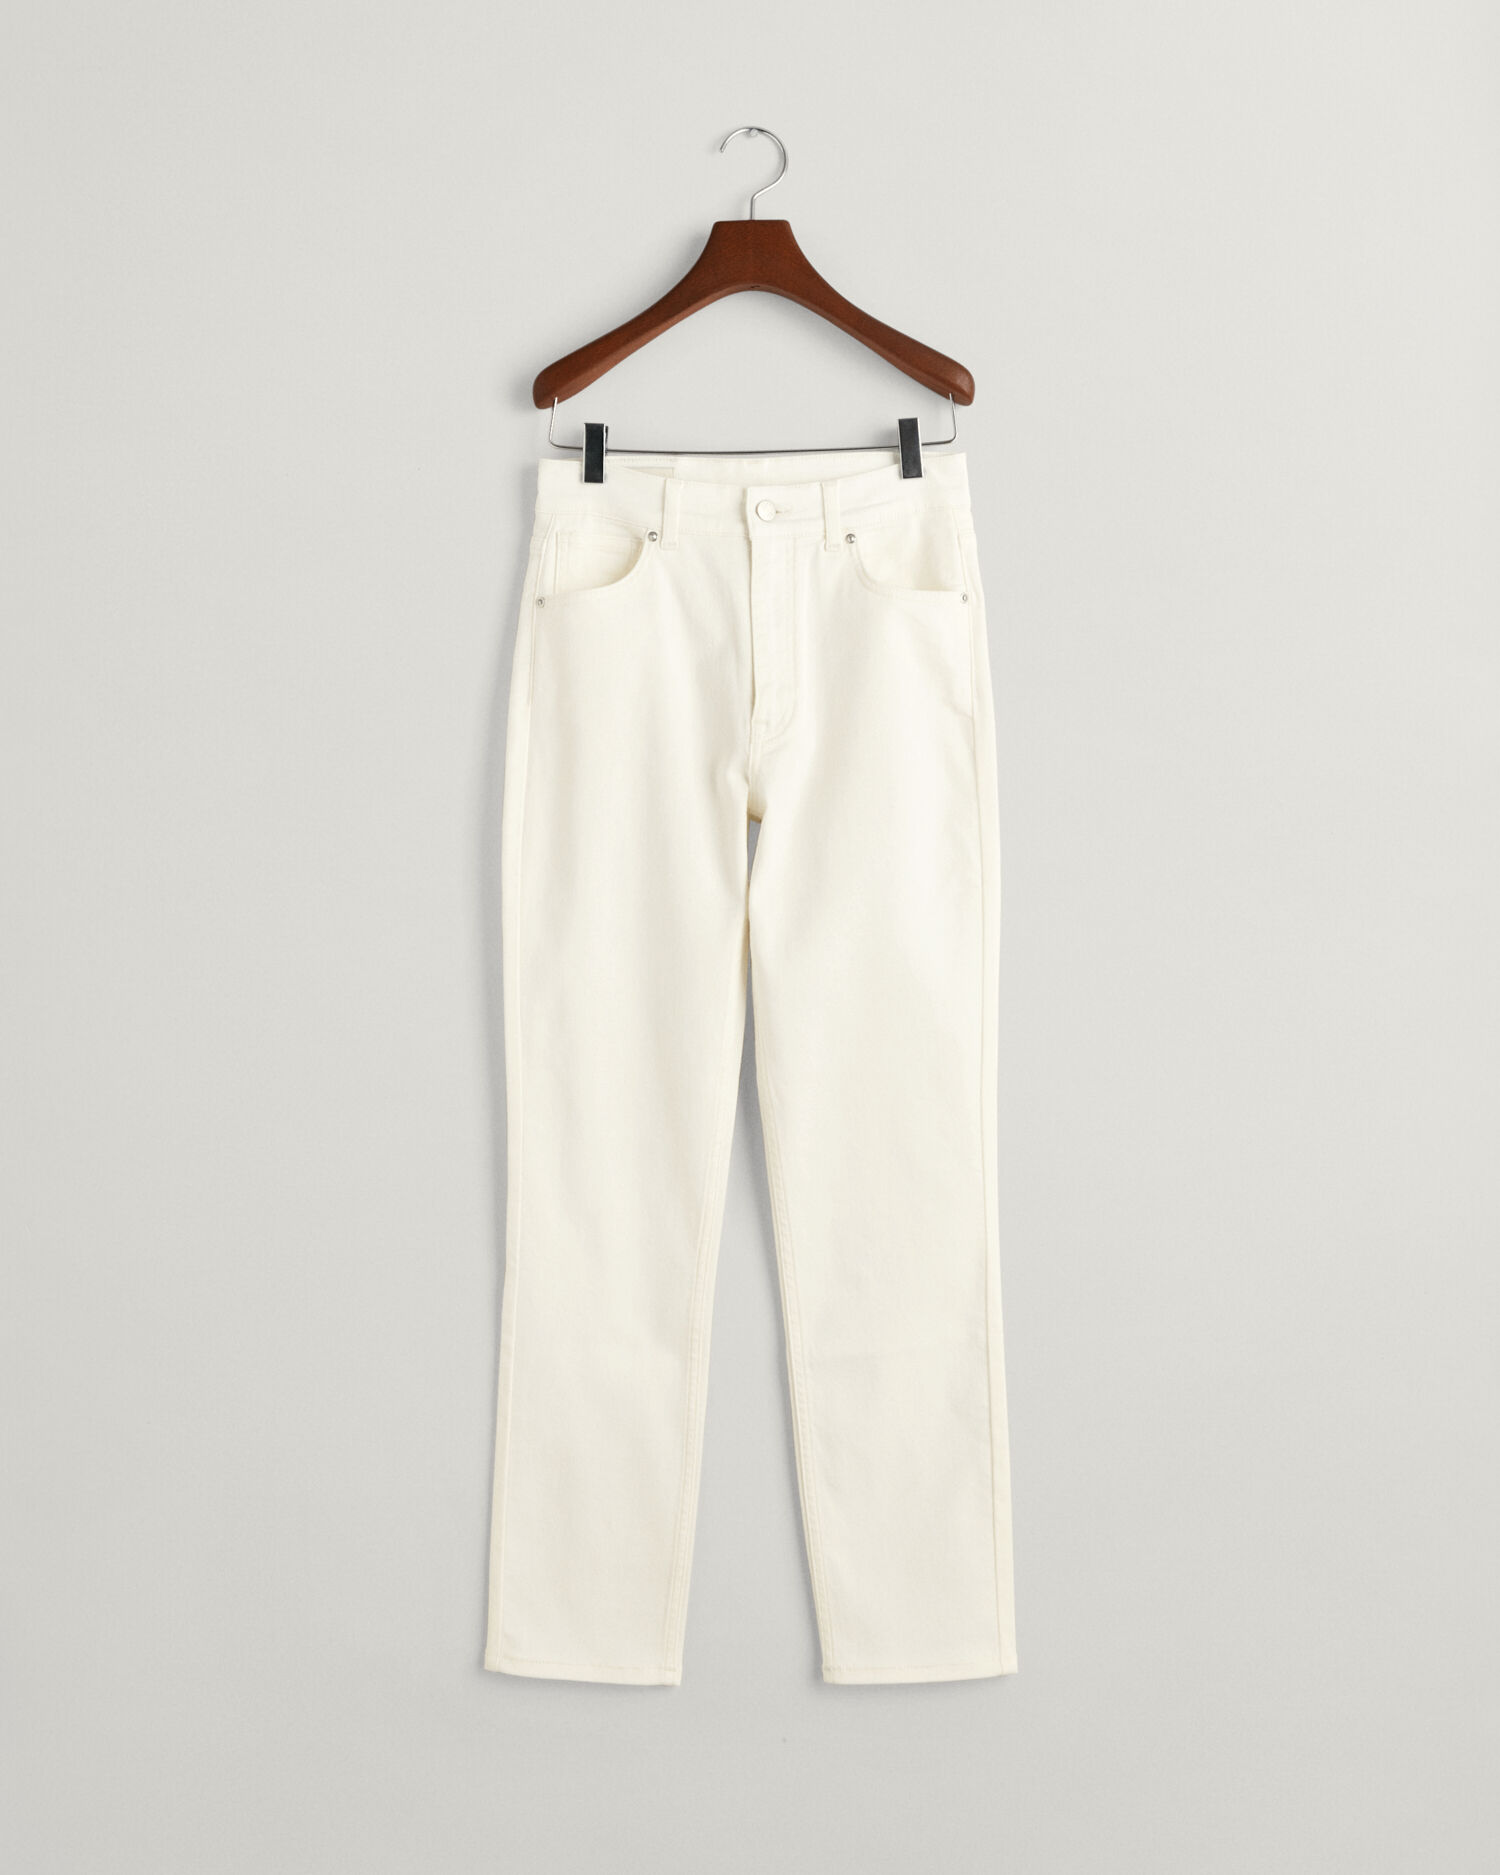 Slim Fit Cropped White Jeans - GANT